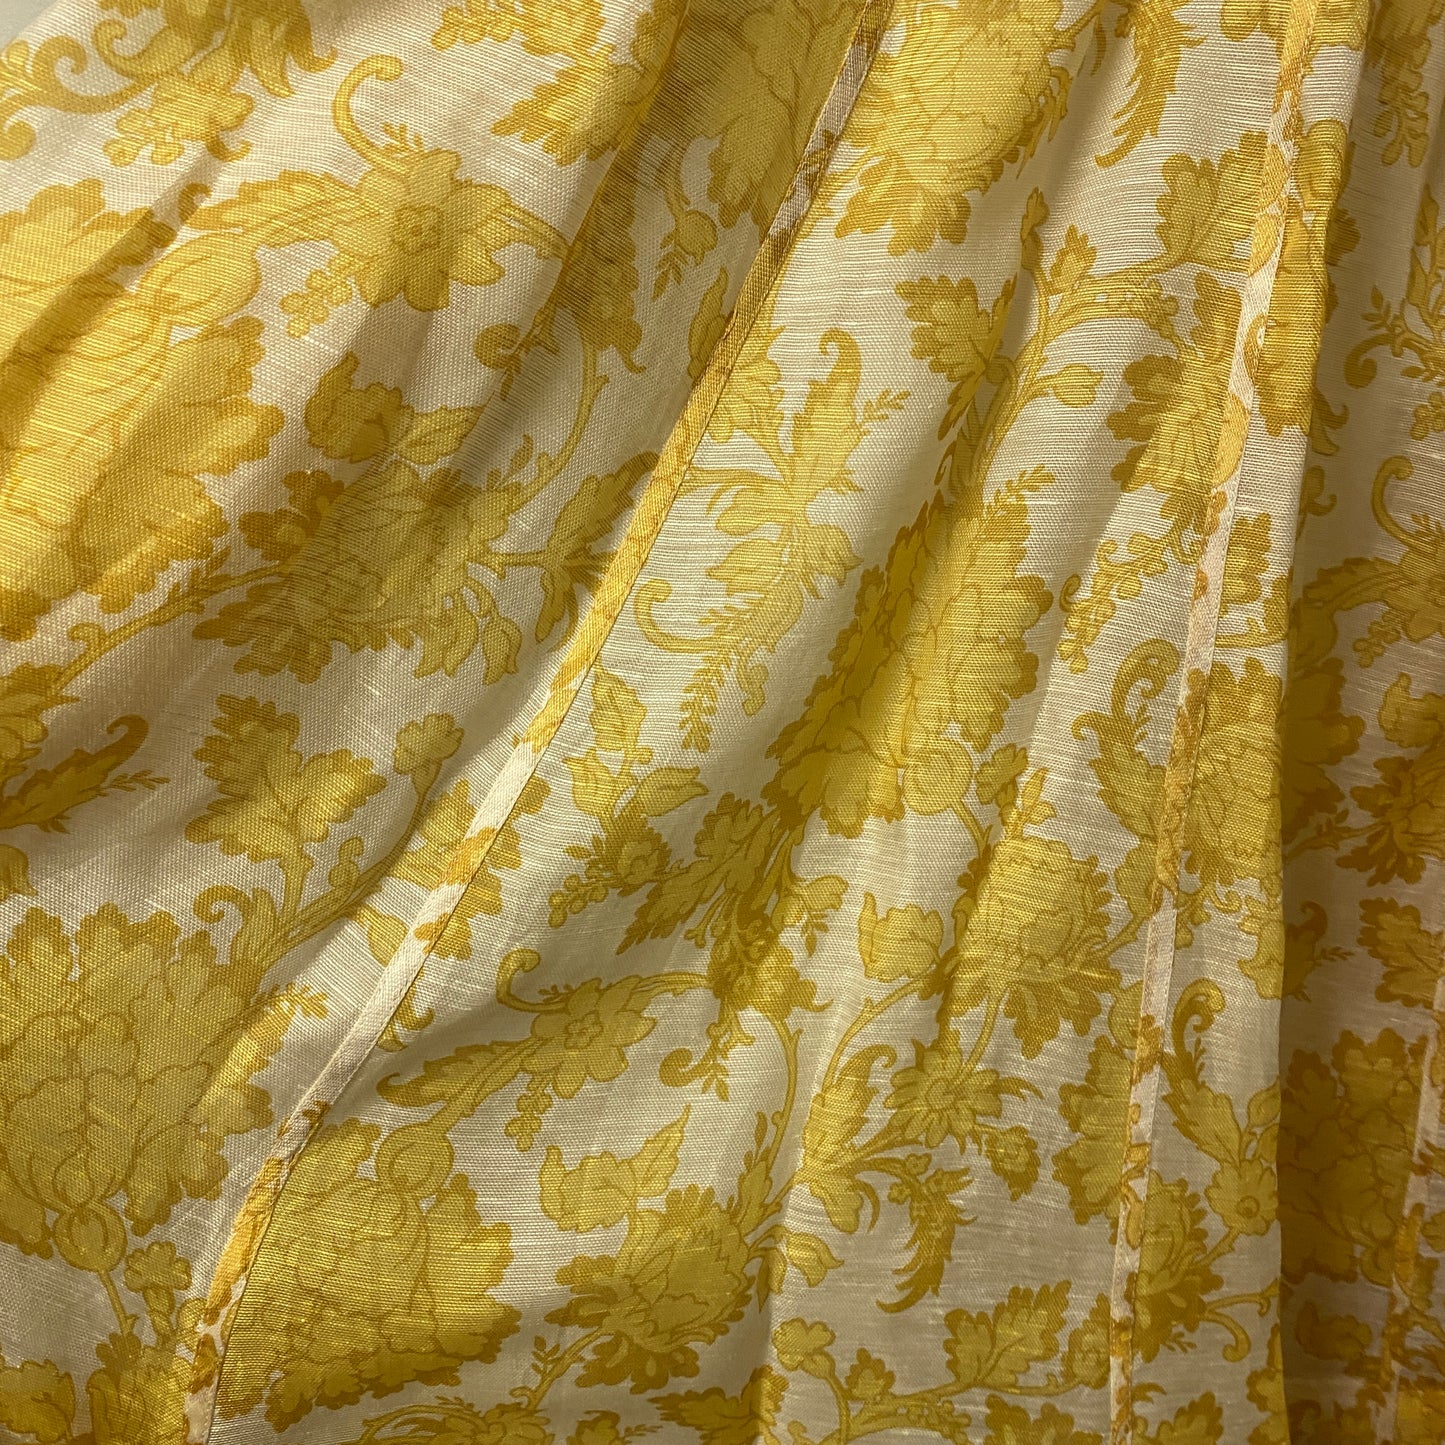 Zimmermann yellow postcard belted dress size 1